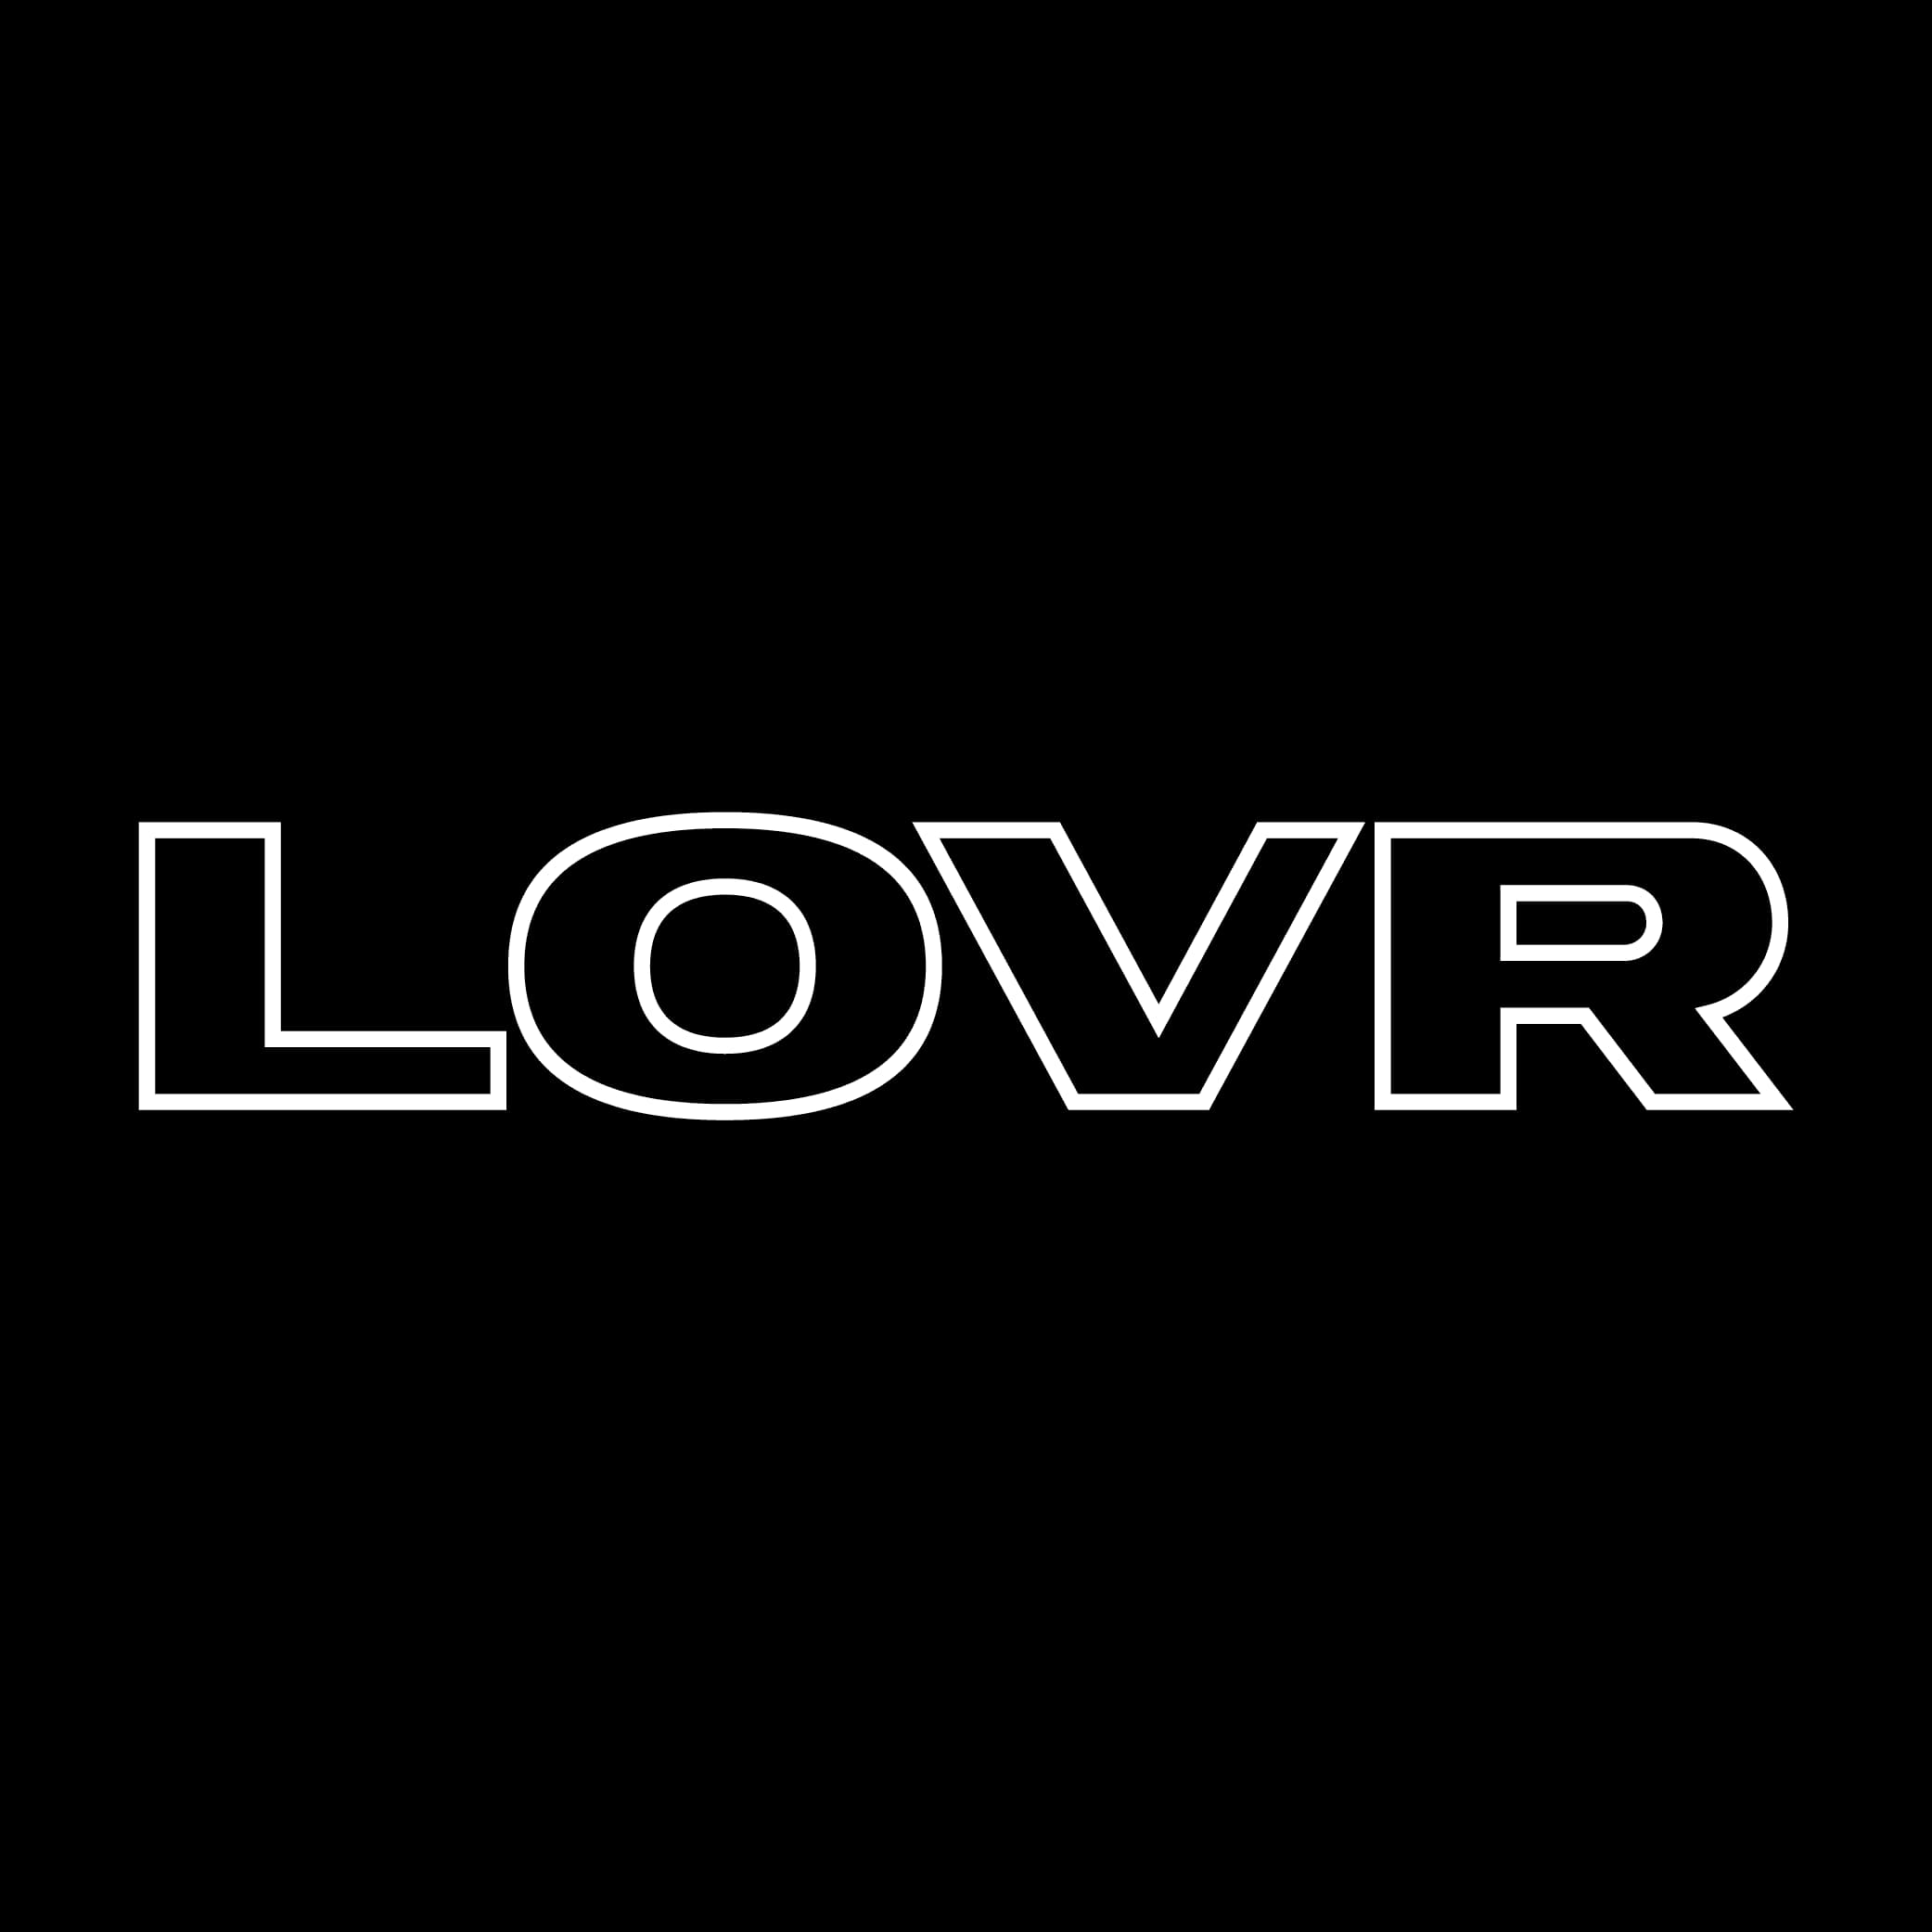 Revoltech GmbH – LOVR logo